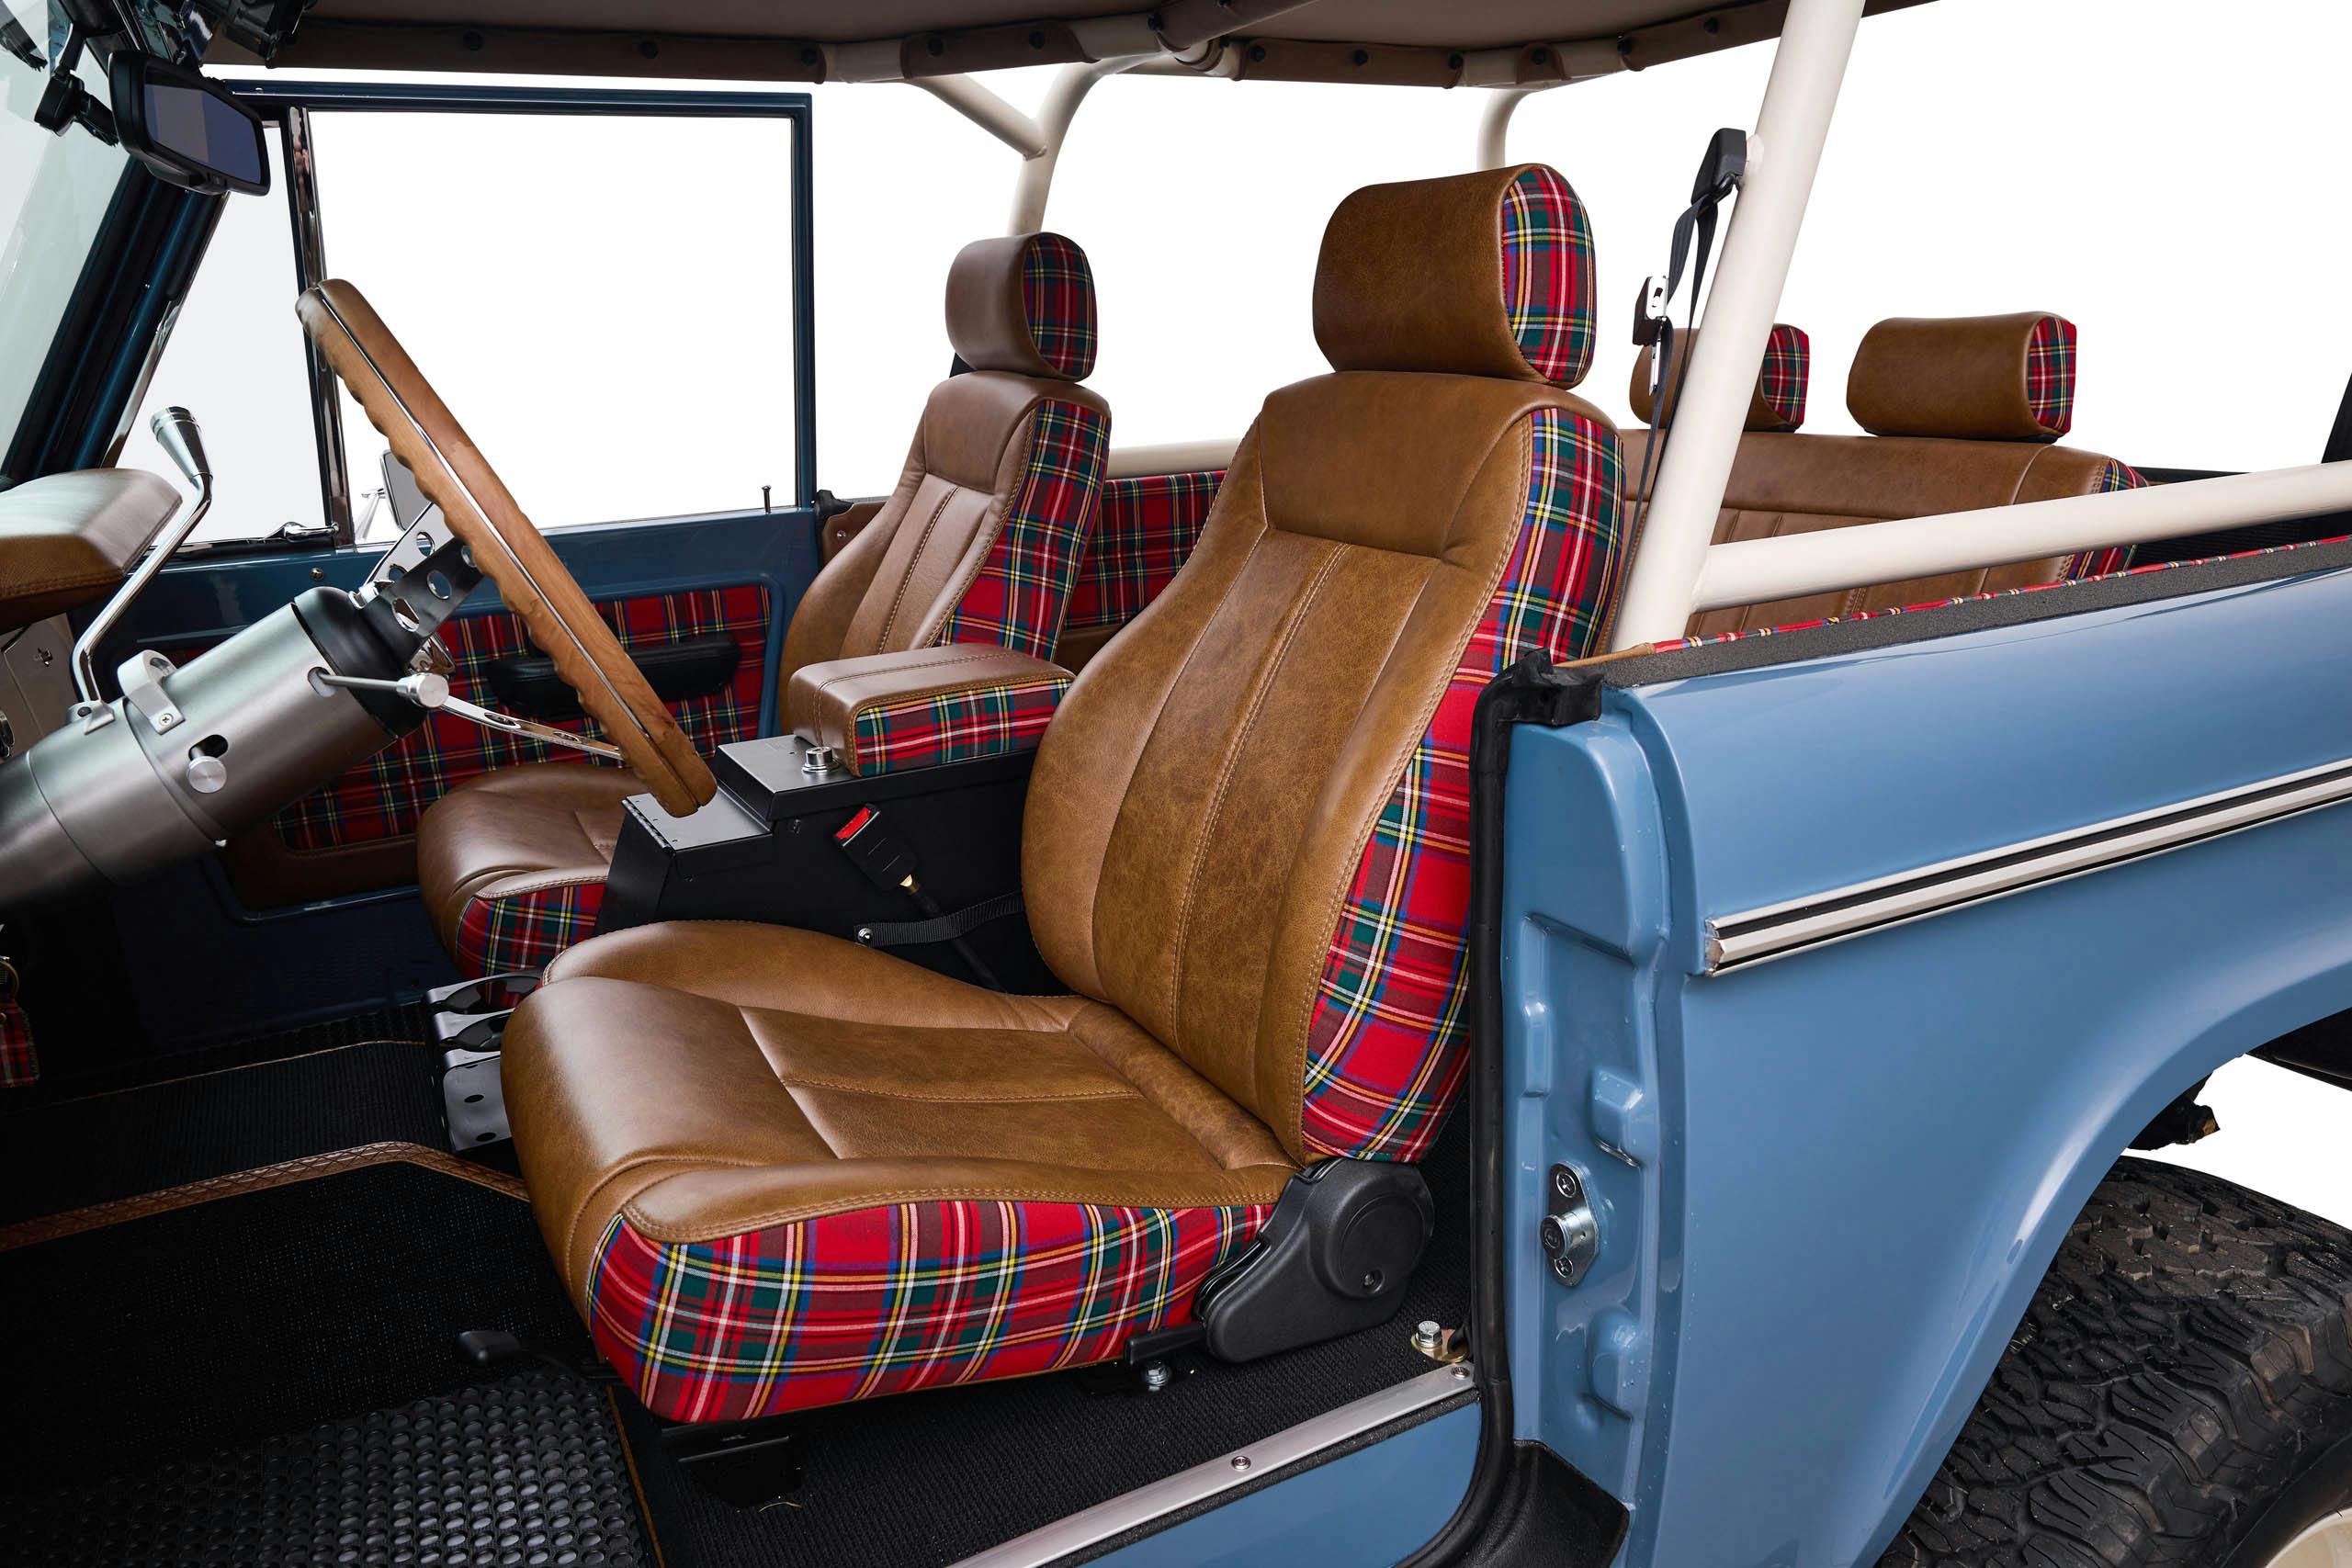 1973 Ford Bronco restomod Charles Schwab Challenge interior front seats and steering wheel